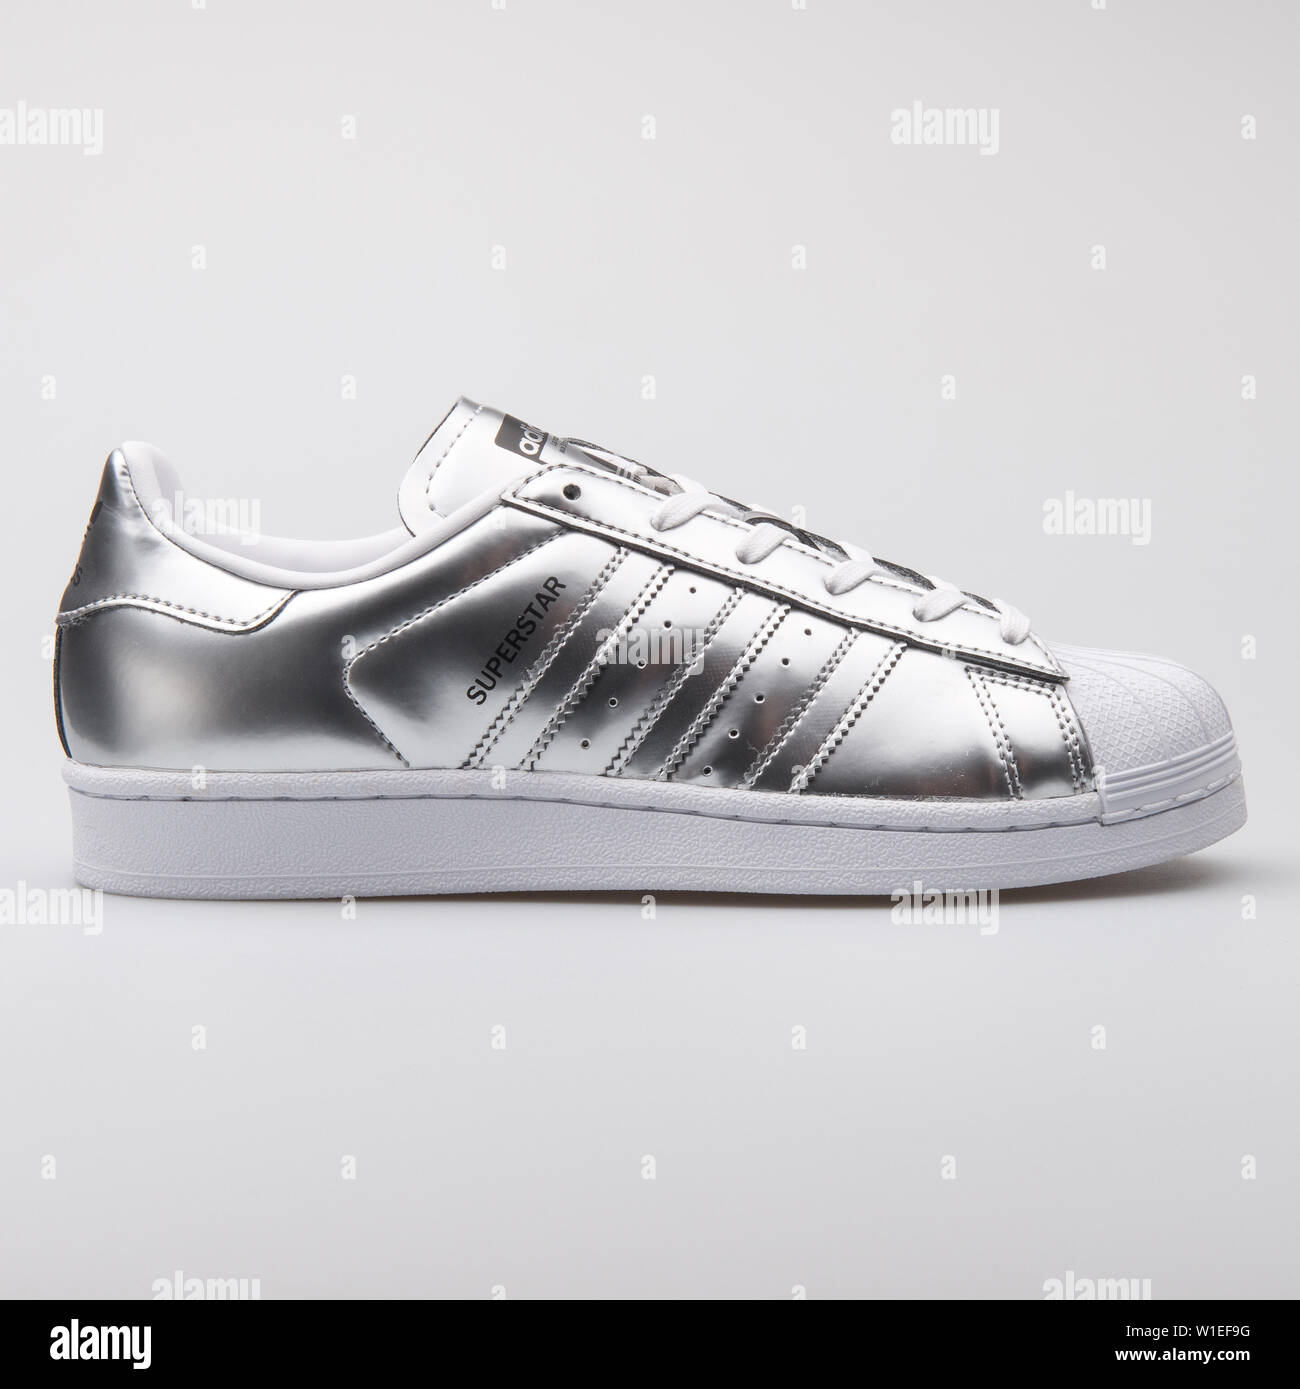 adidas superstar metallic silver white